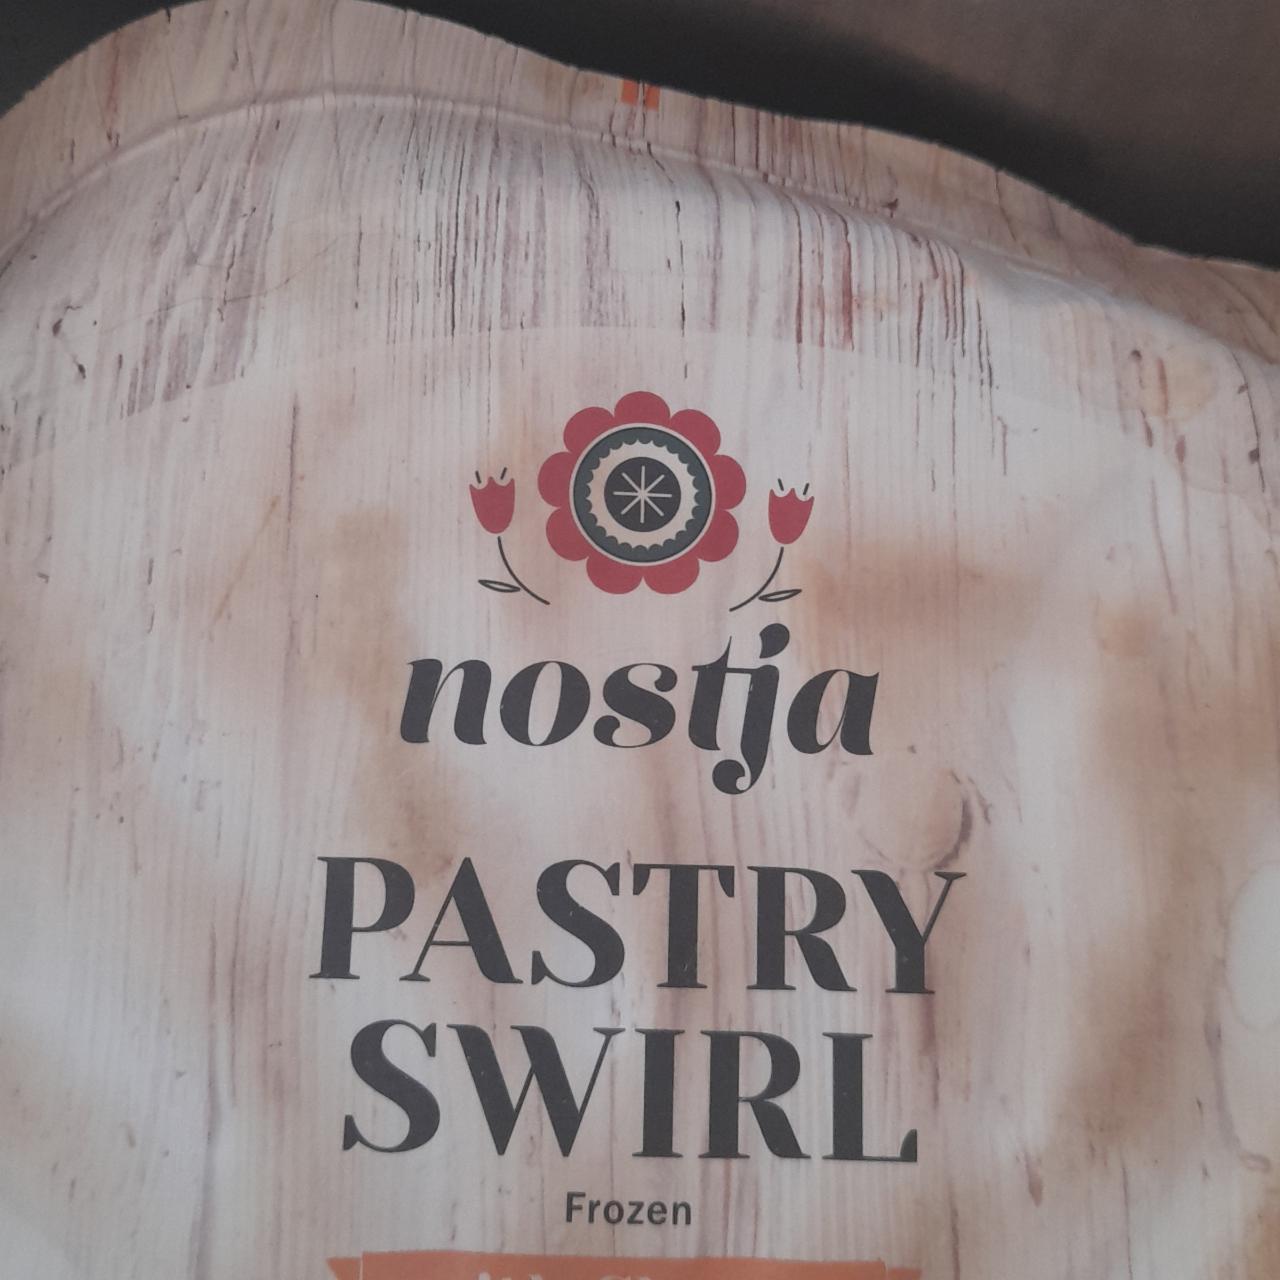 Fotografie - Pastry swirl frozen with cheese Nostja